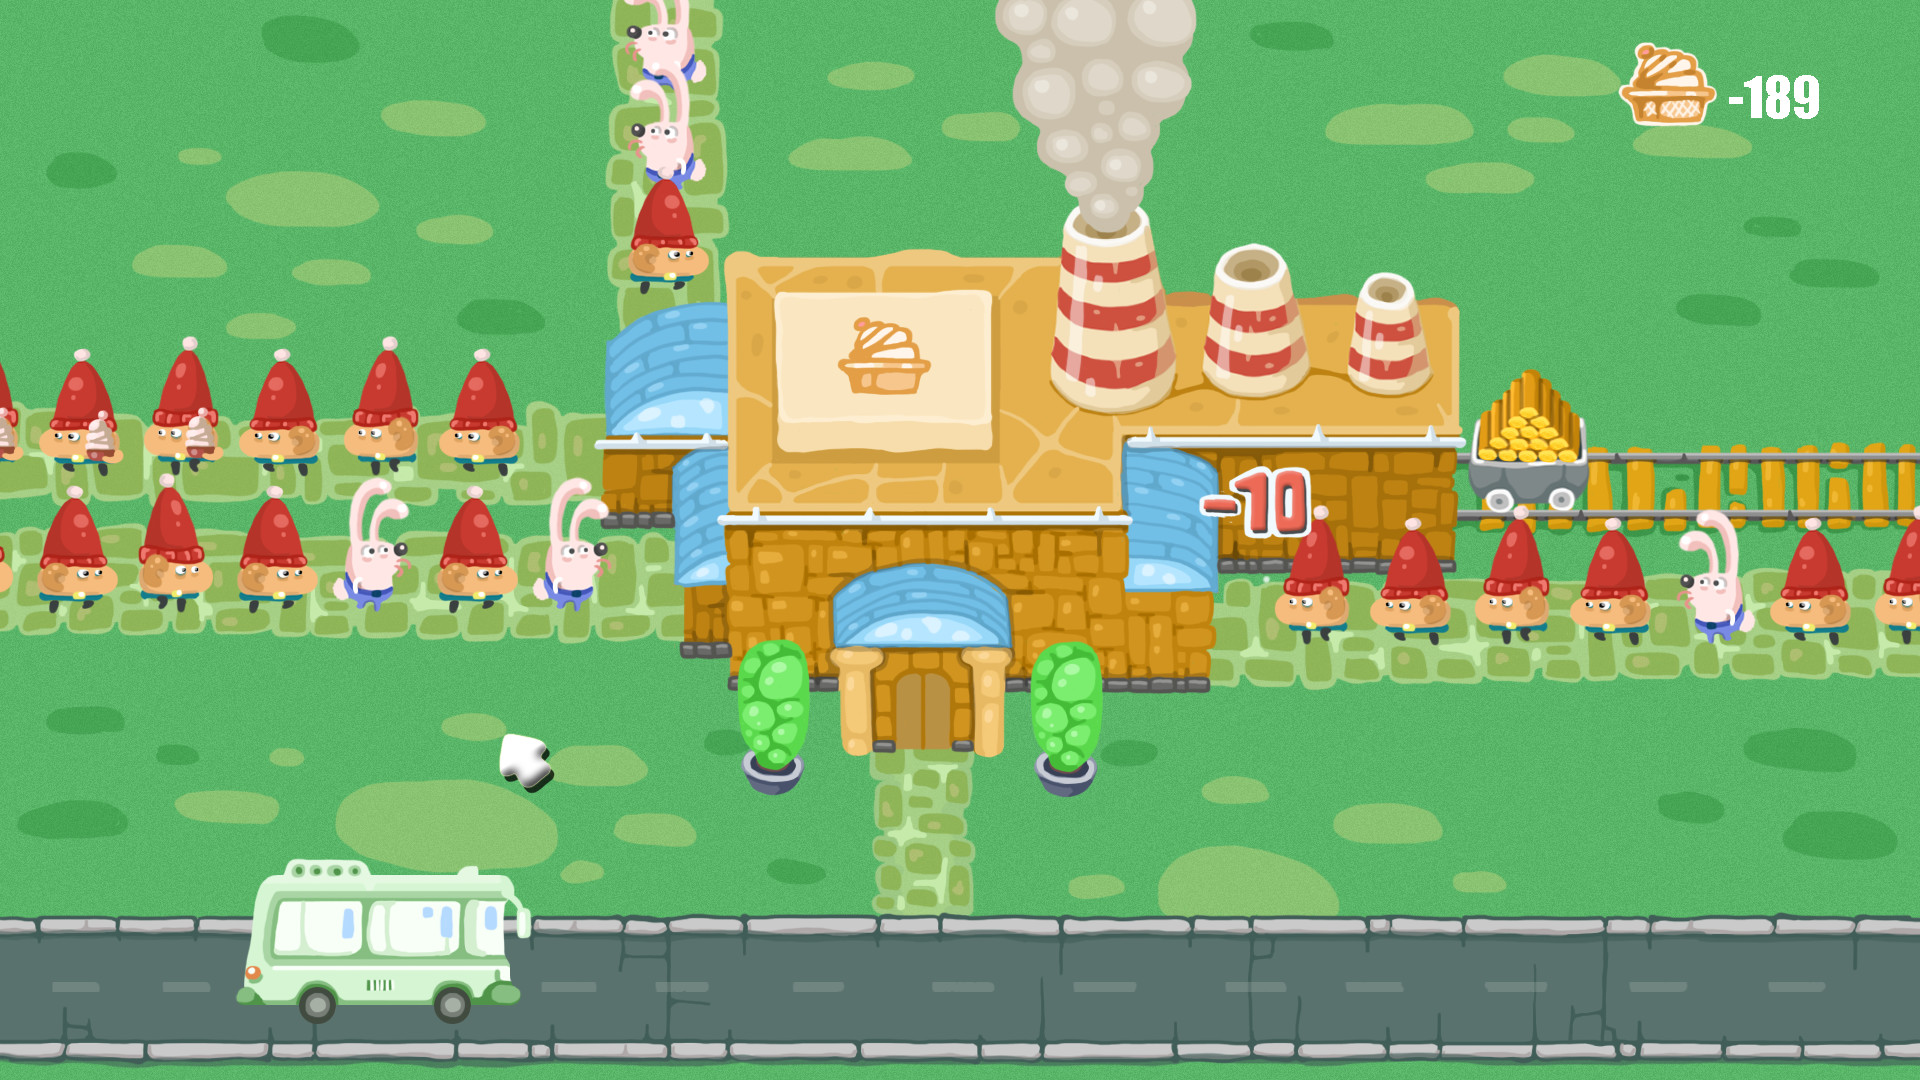 Chocolate Factory screenshot